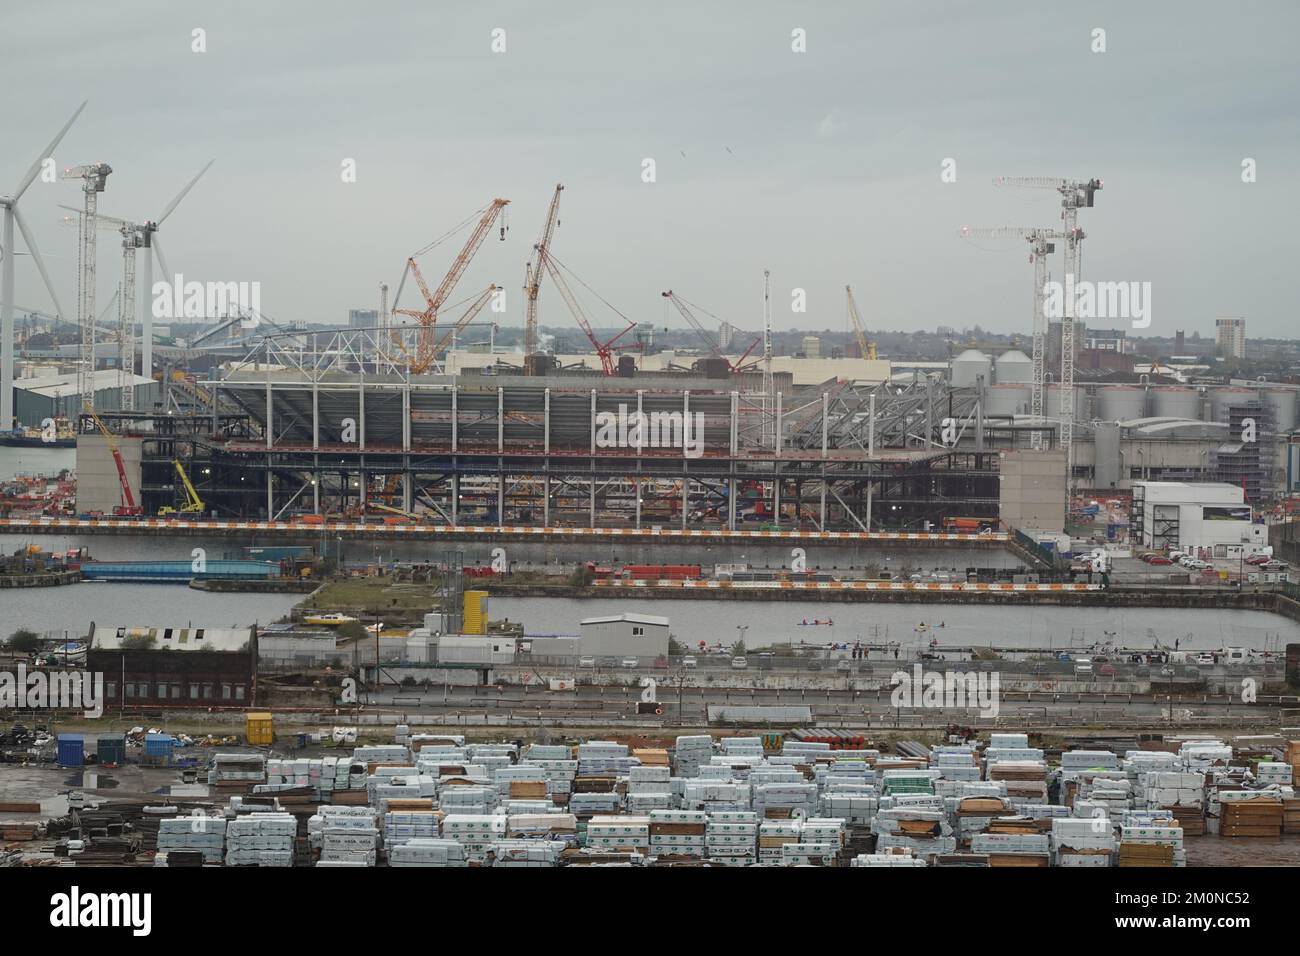 Everton FC new stadium being built at Bramley Moore dock, Liverpool, Merseyside UK, Stock Photo